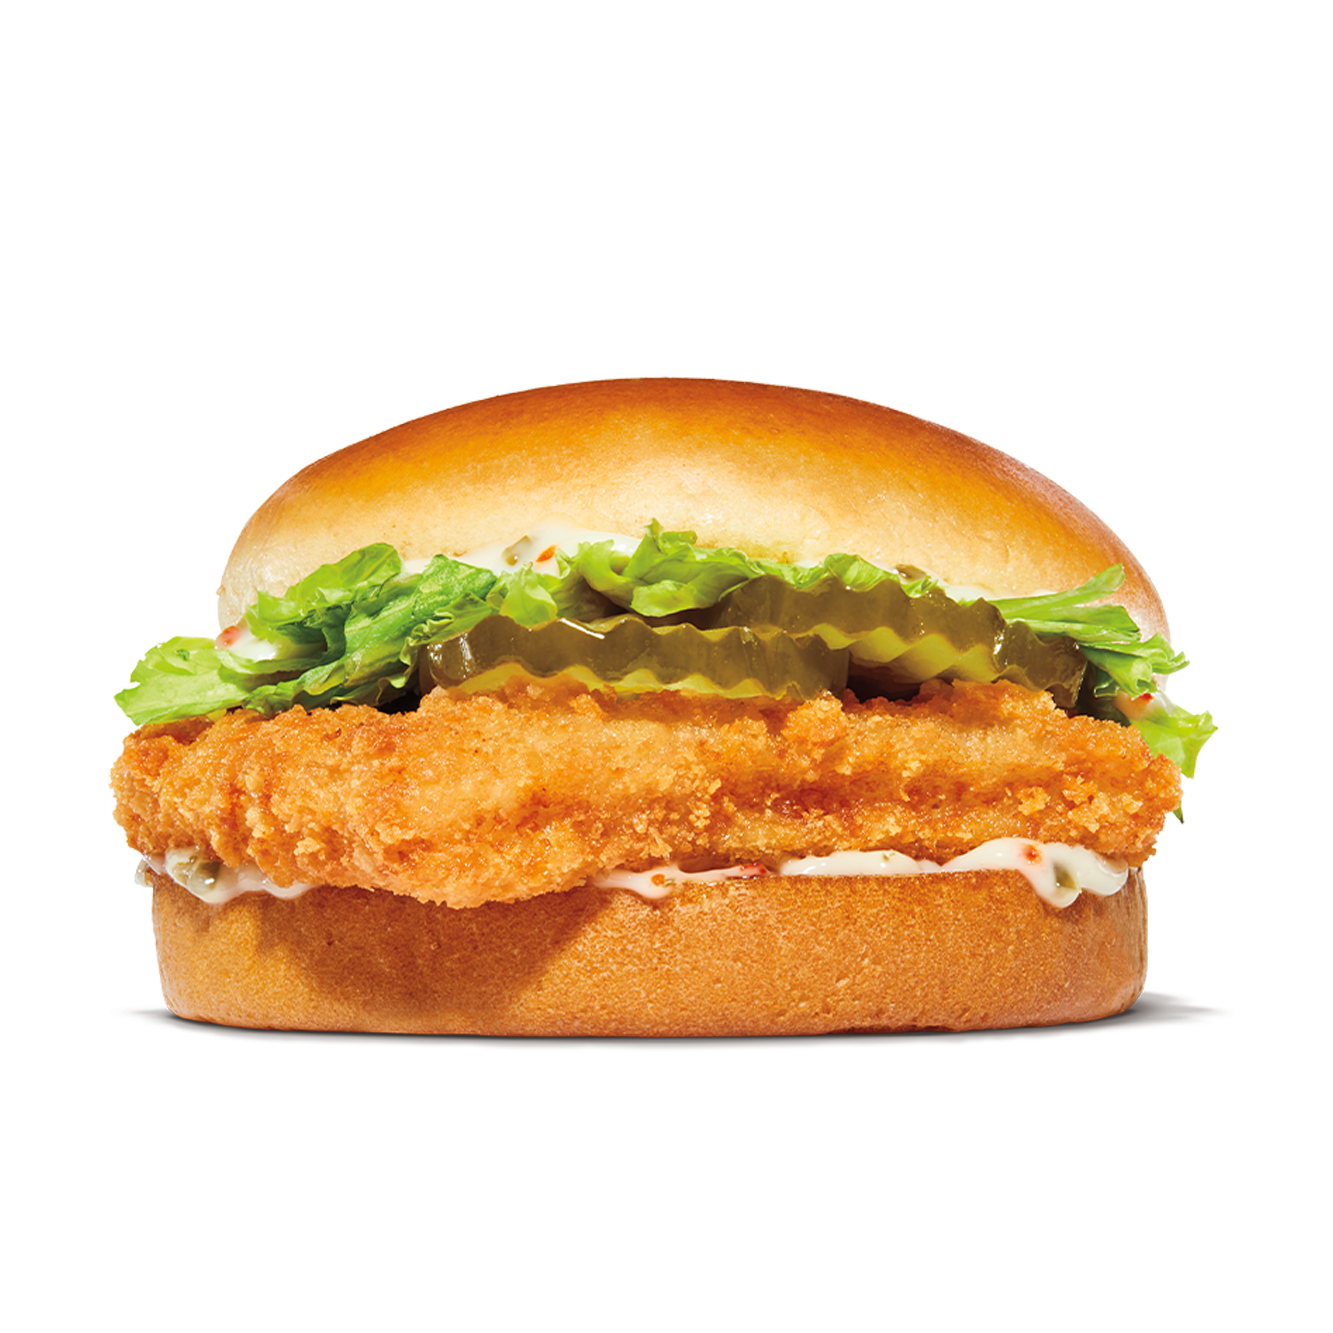 Burger King Mount Pleasant (989)773-5080